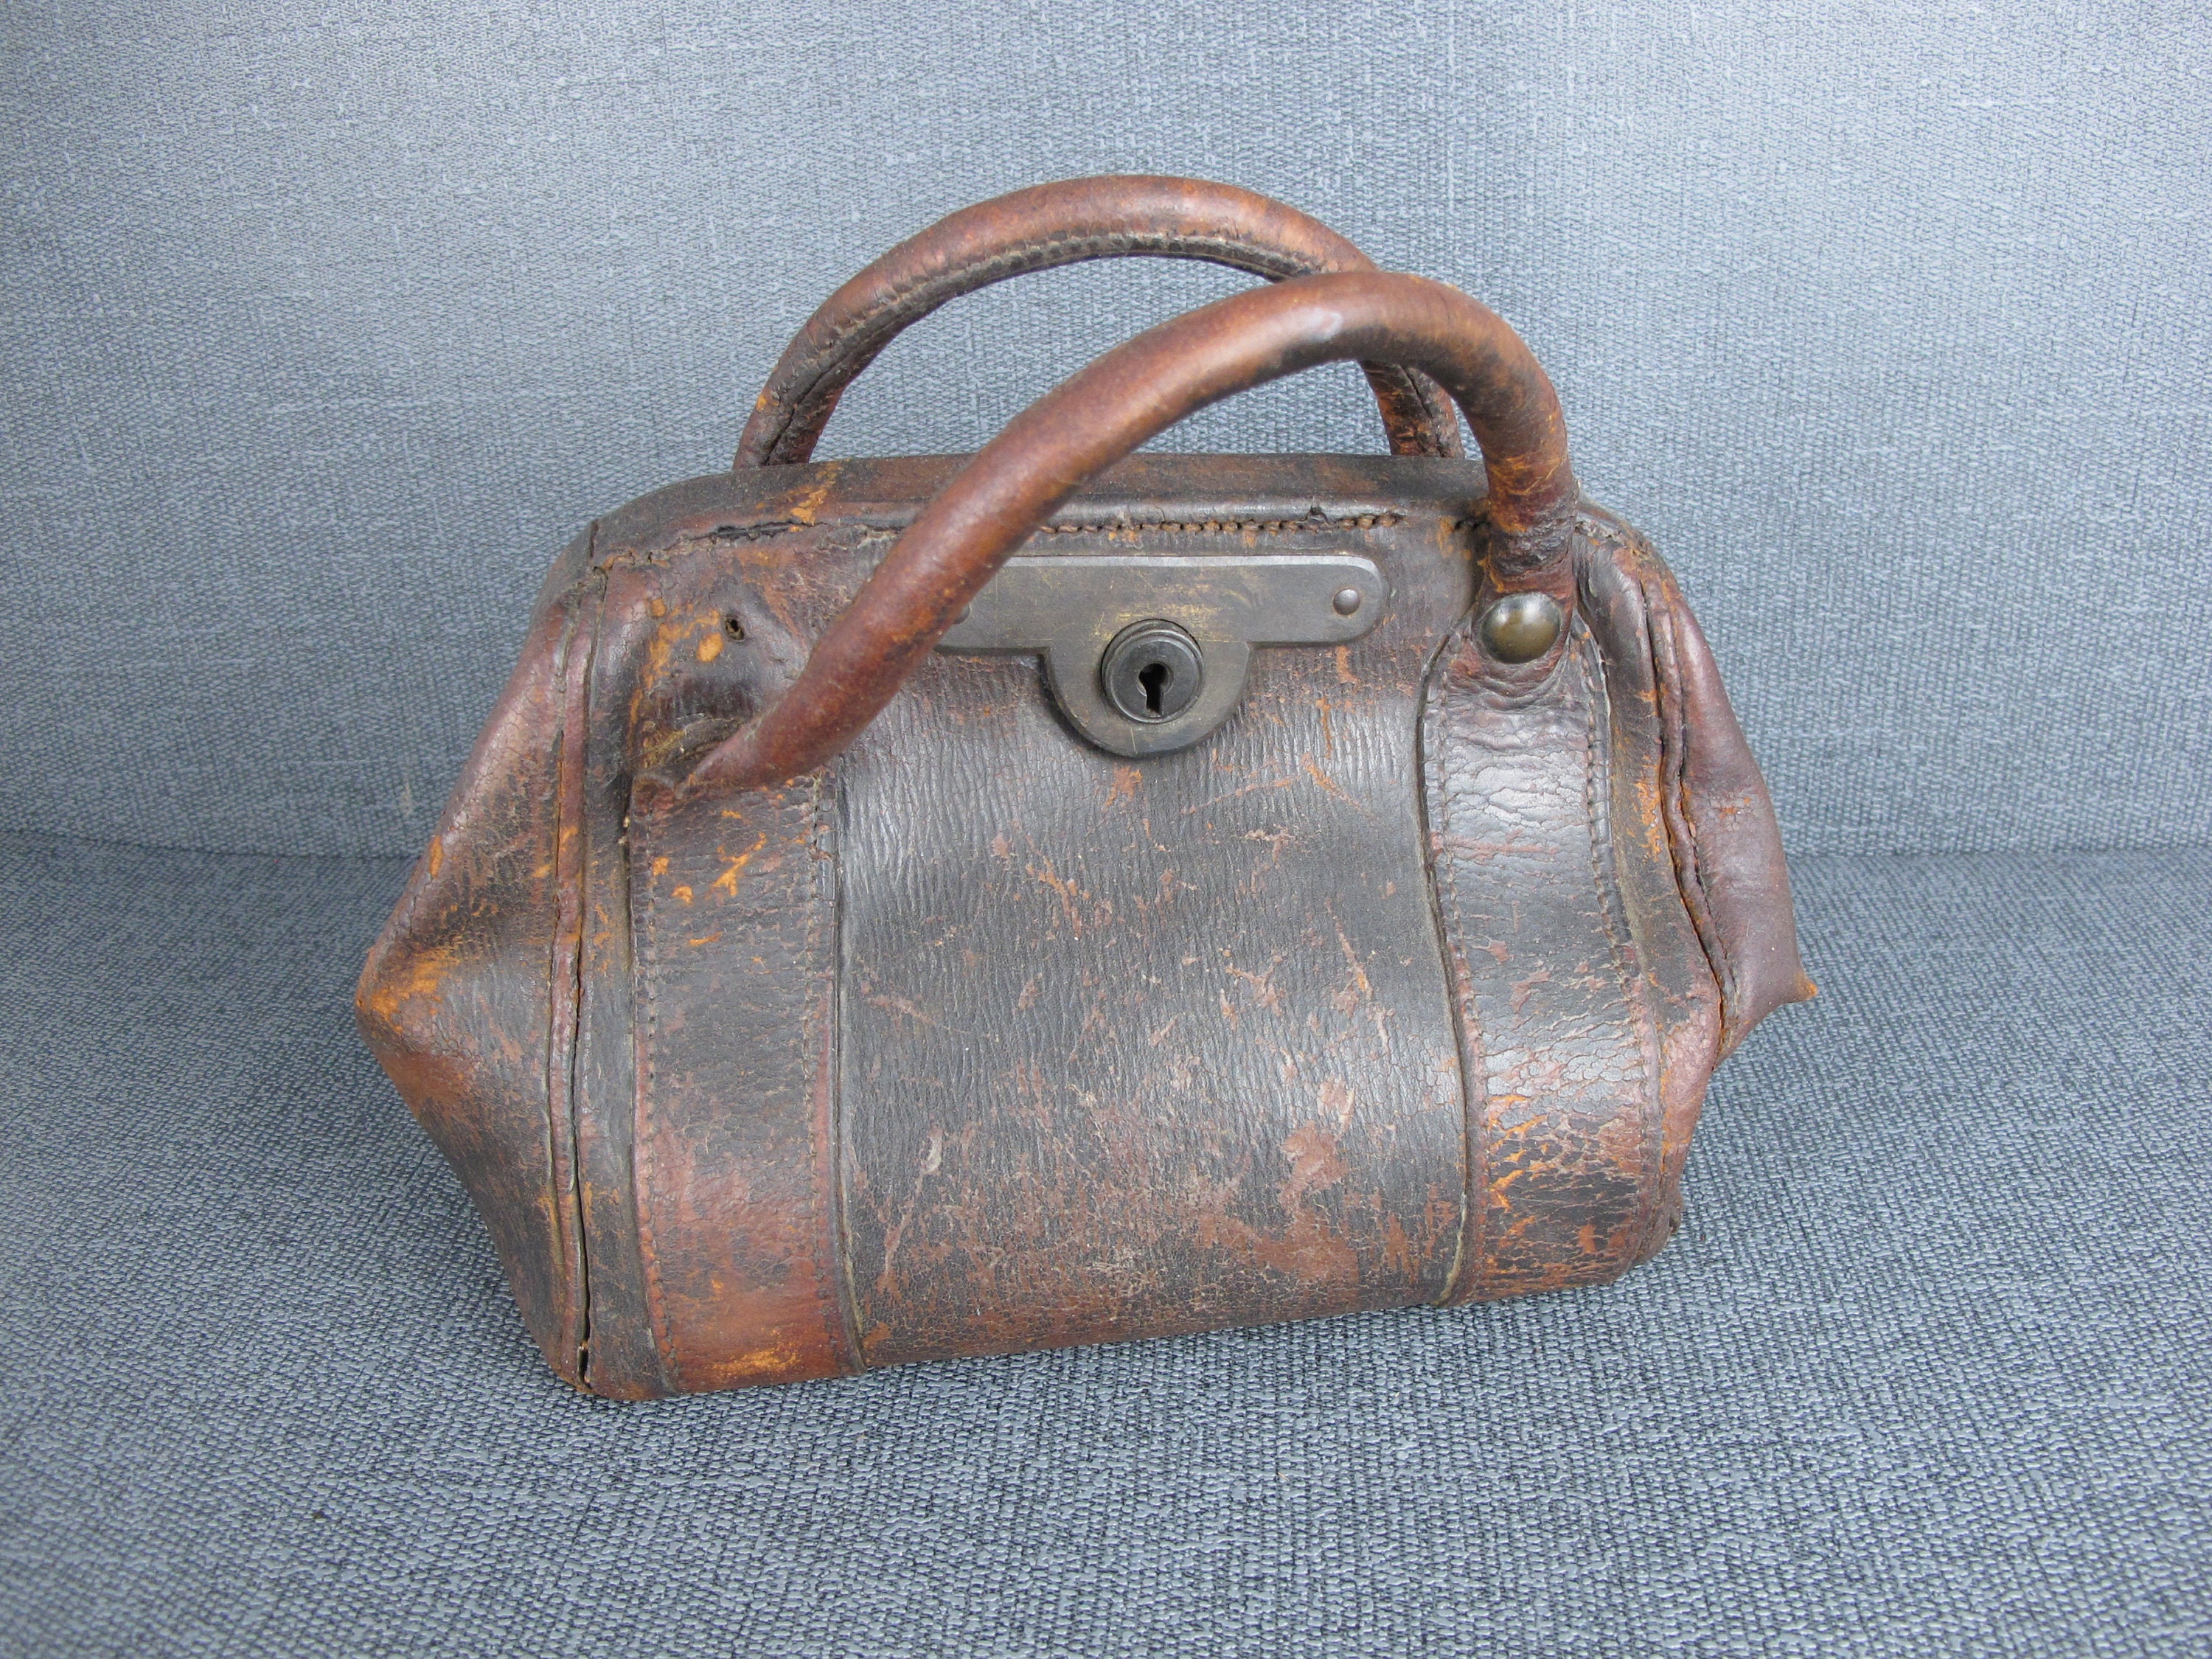 Antique Brown Leather Bag. Display Bag. Distressed Worn 